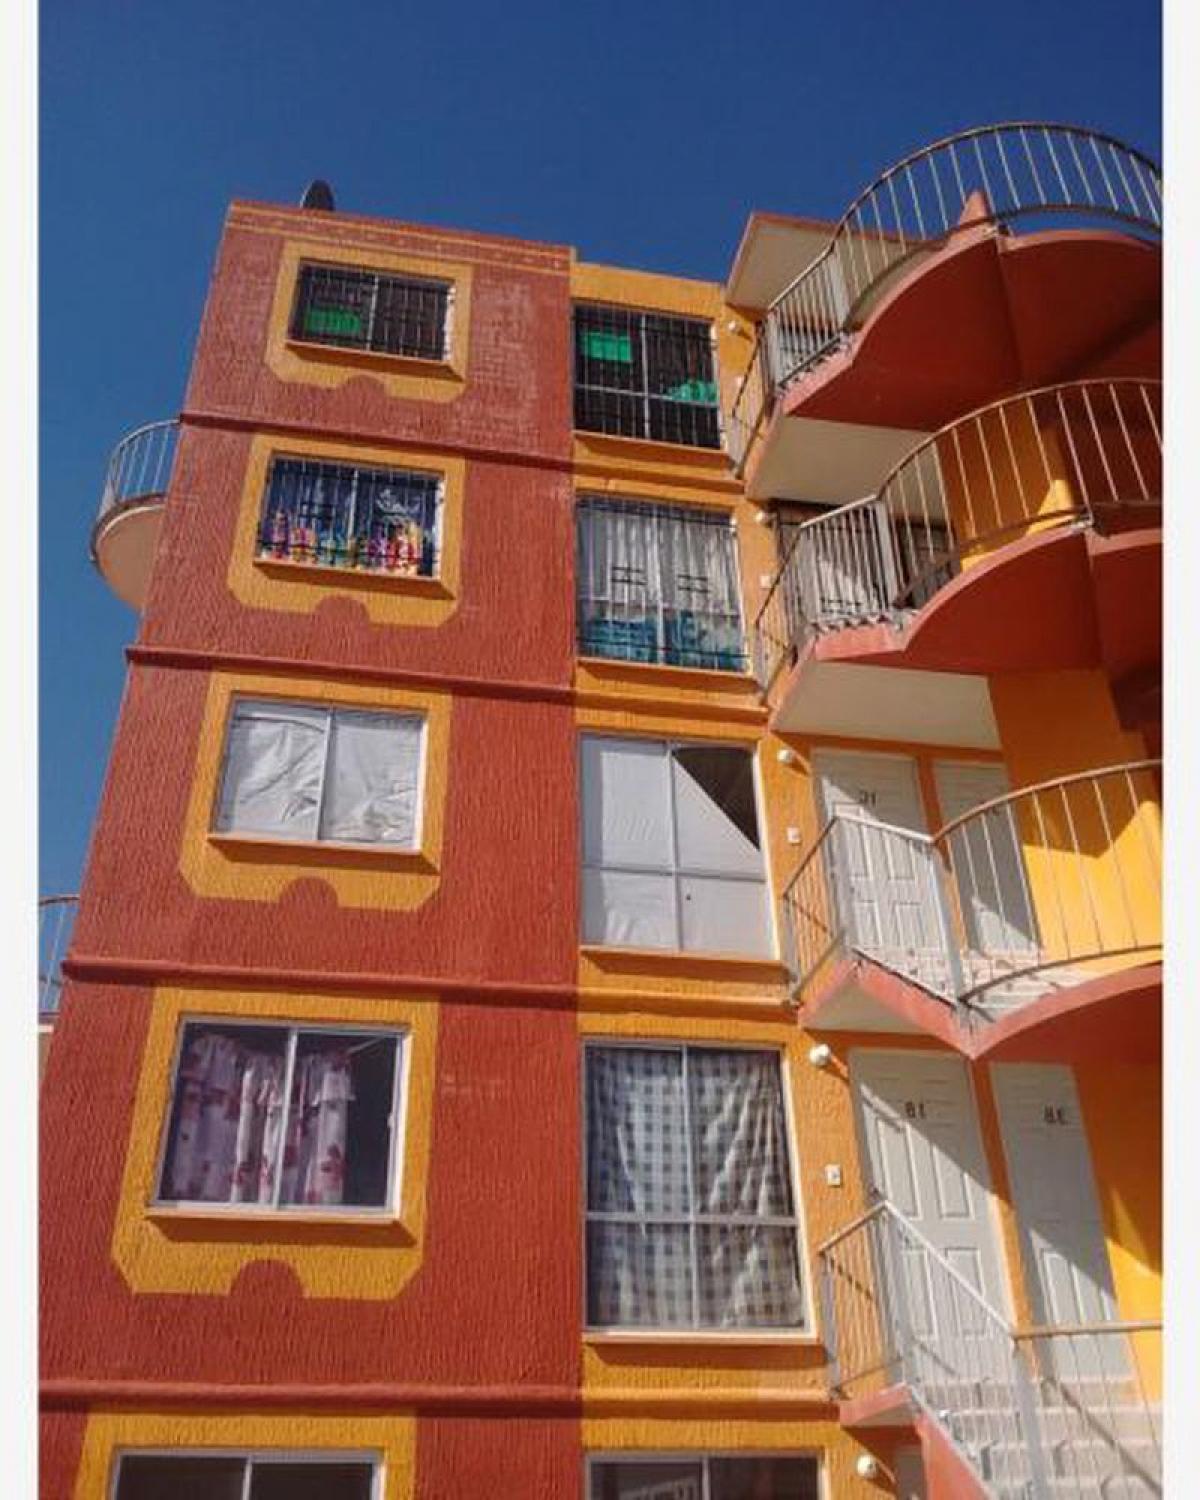 Picture of Apartment For Sale in Cuautlancingo, Puebla, Mexico